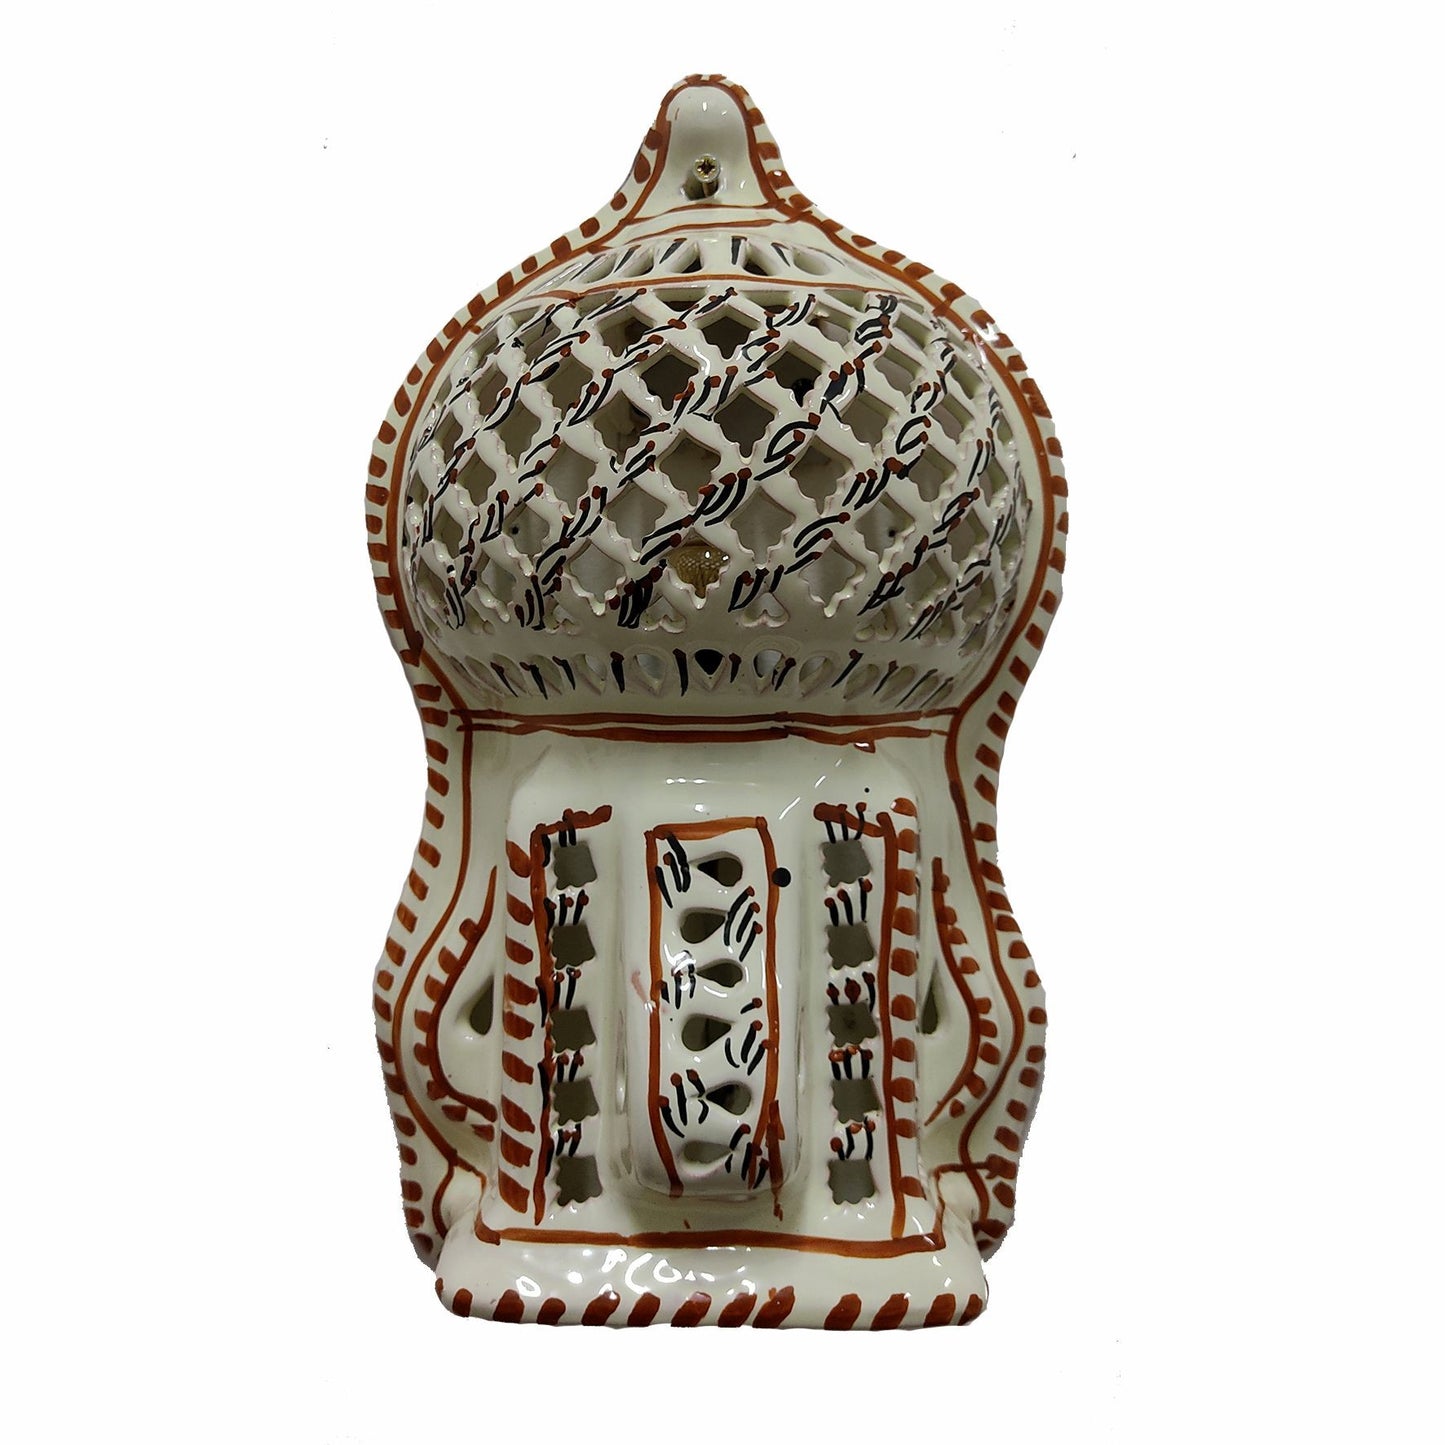 Arredo Etnico Applique Parete Lampada Terracotta Tunisina Marocchina 1401211102